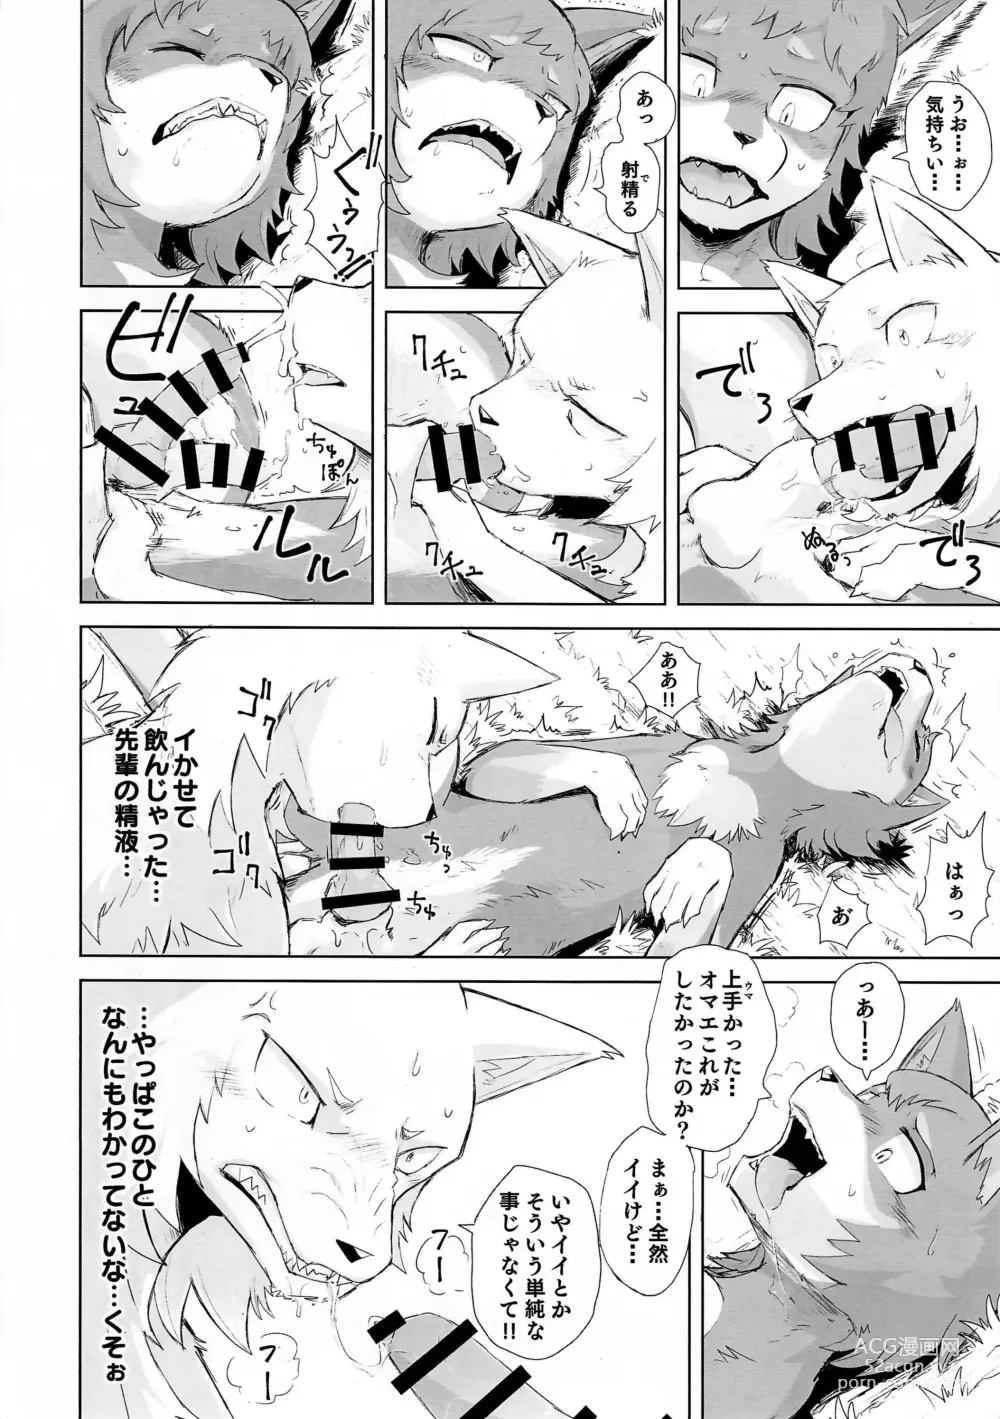 Page 37 of doujinshi Dearest 2